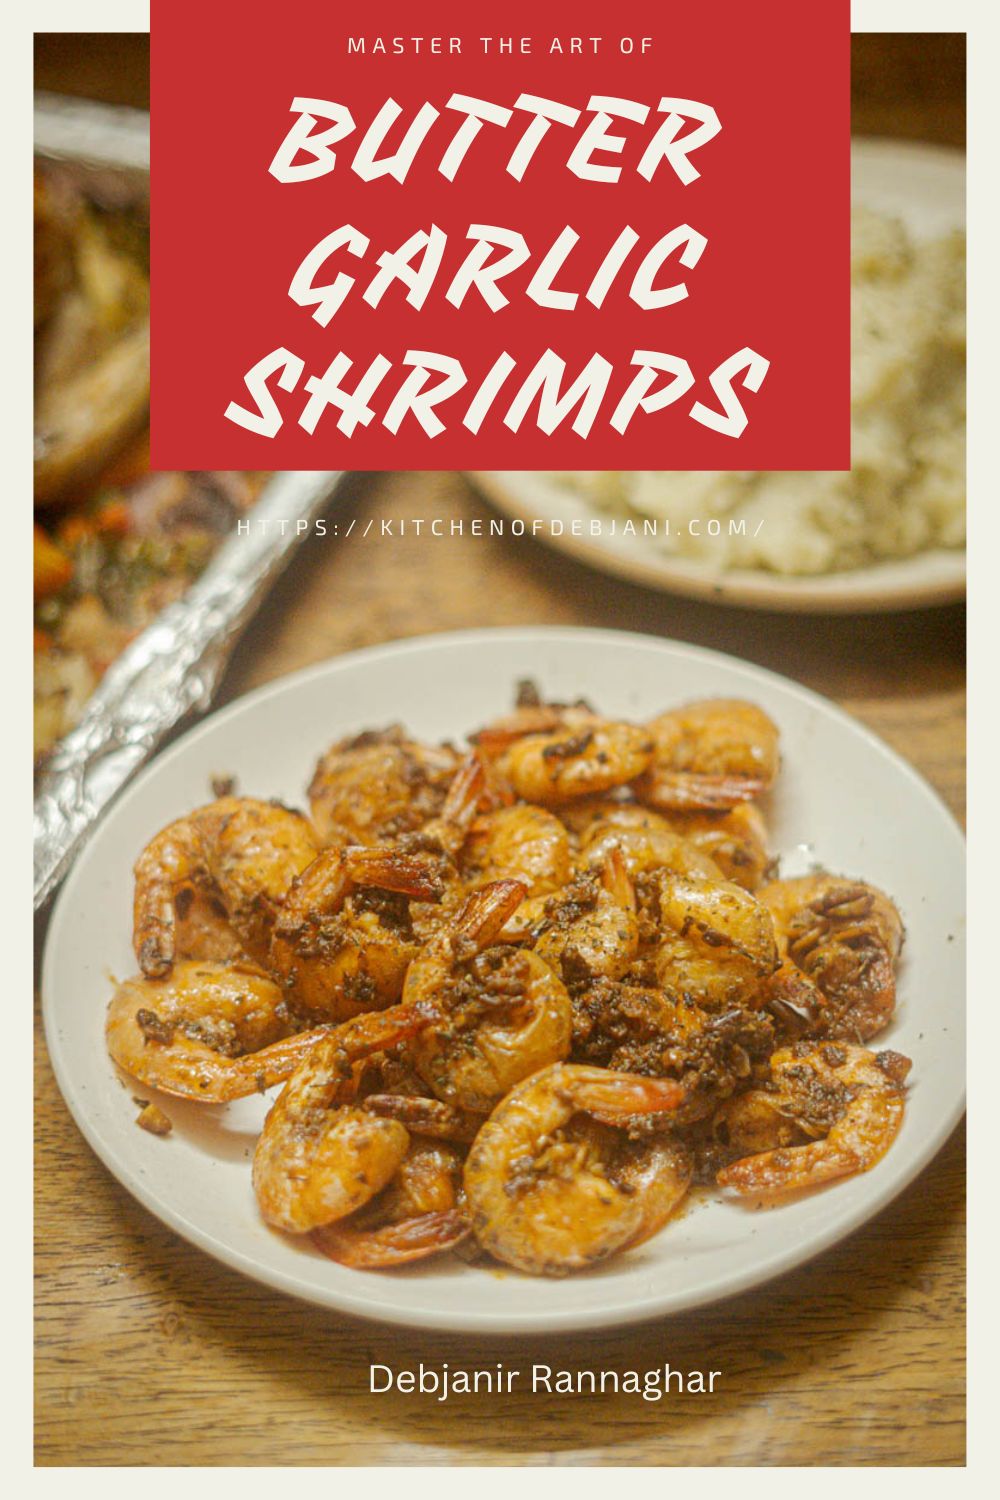 %master the art of making butter garlic shrimps Recipe Pinterest Graphic